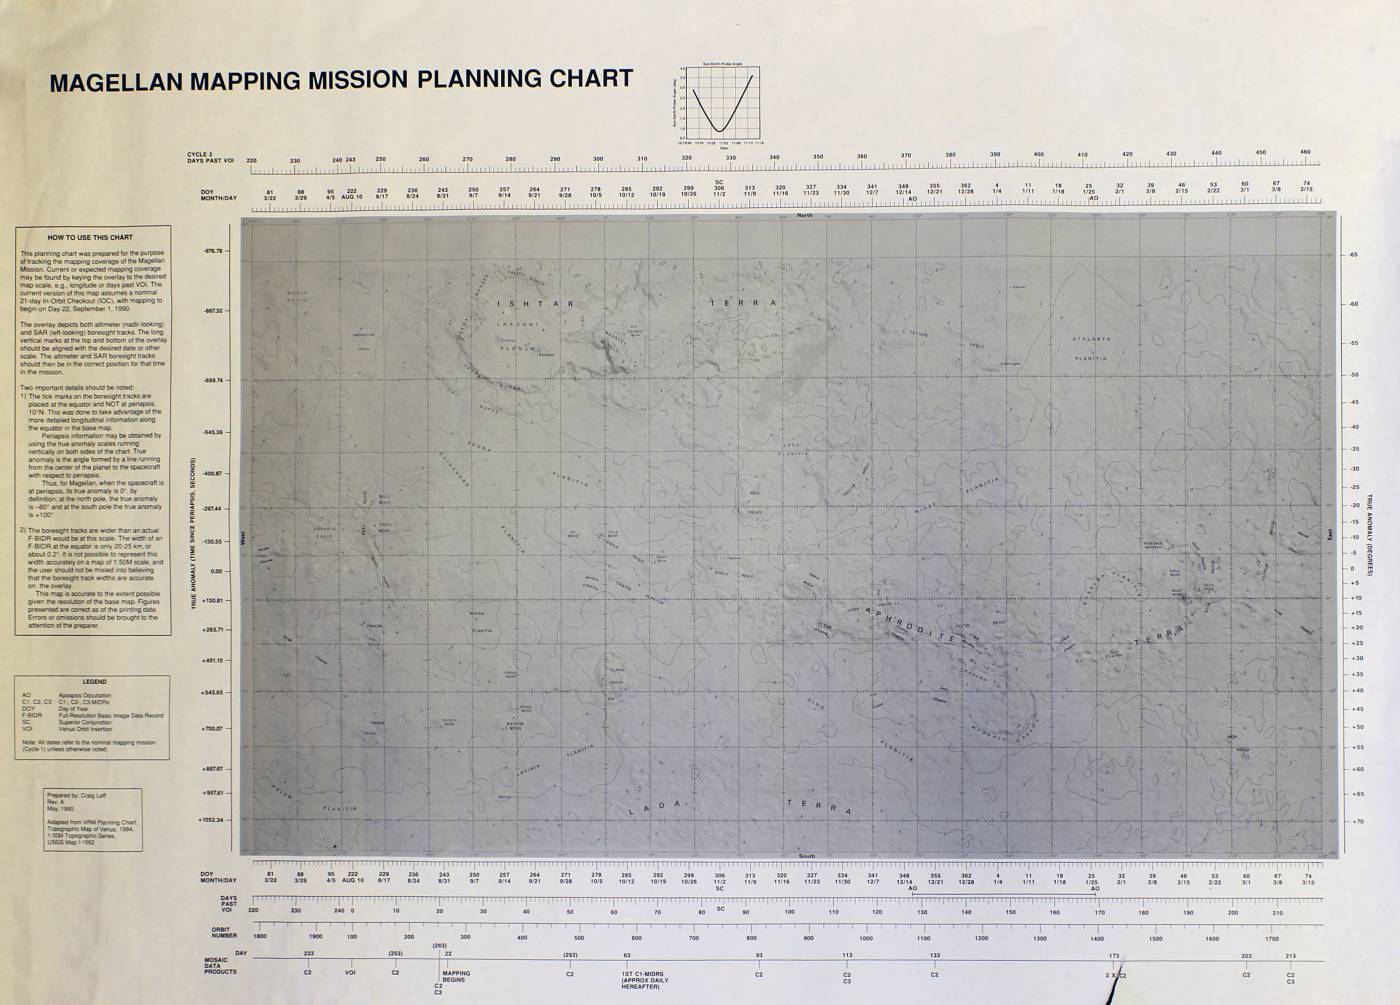 Magellan planning chart…